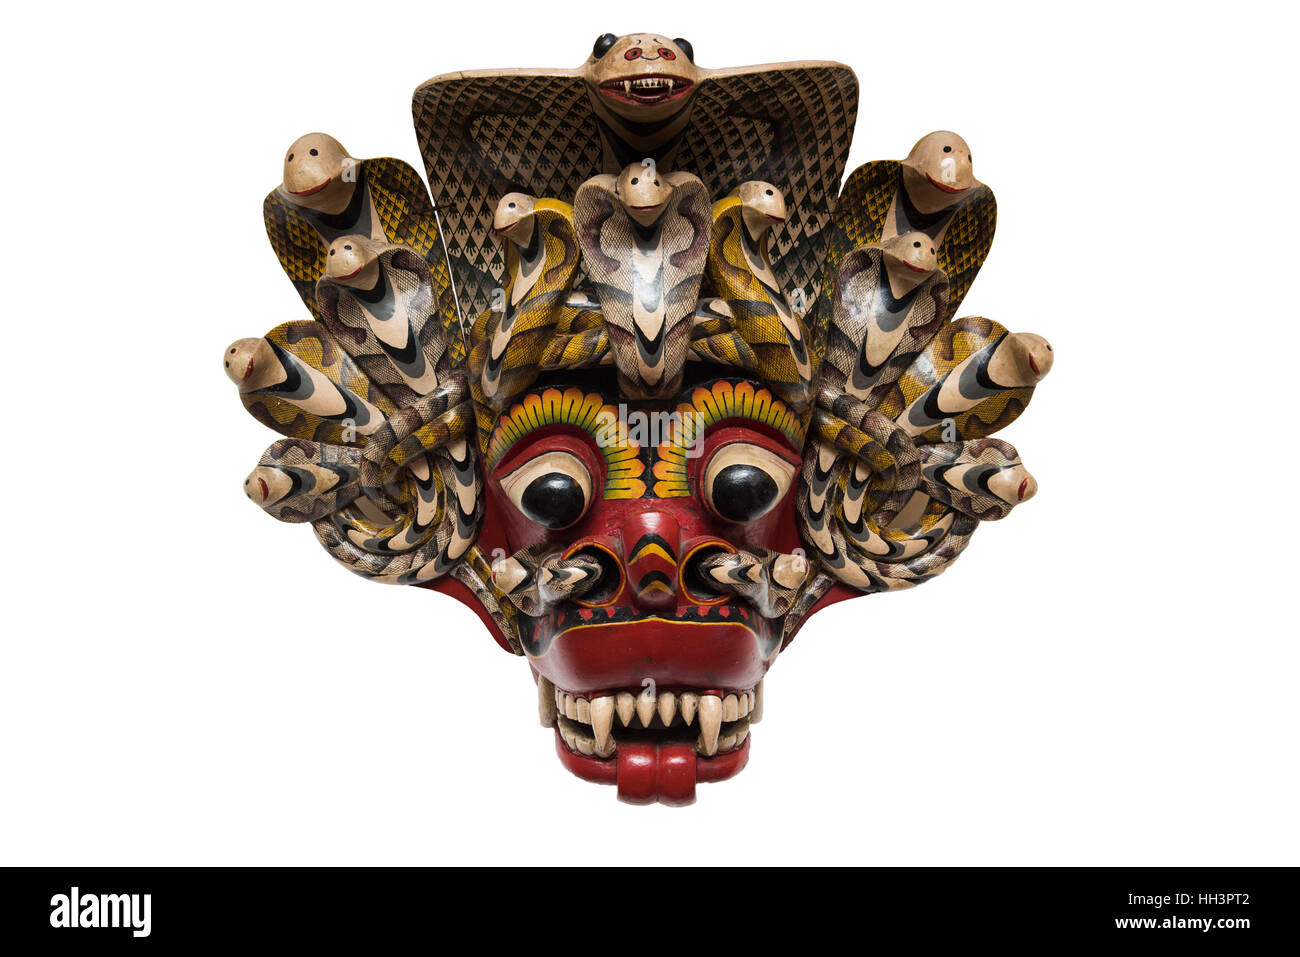 Masque ancien traditionnel, Ariyapala et Fils, Musée du Masque, Sri Lanka Ambalangoda Banque D'Images